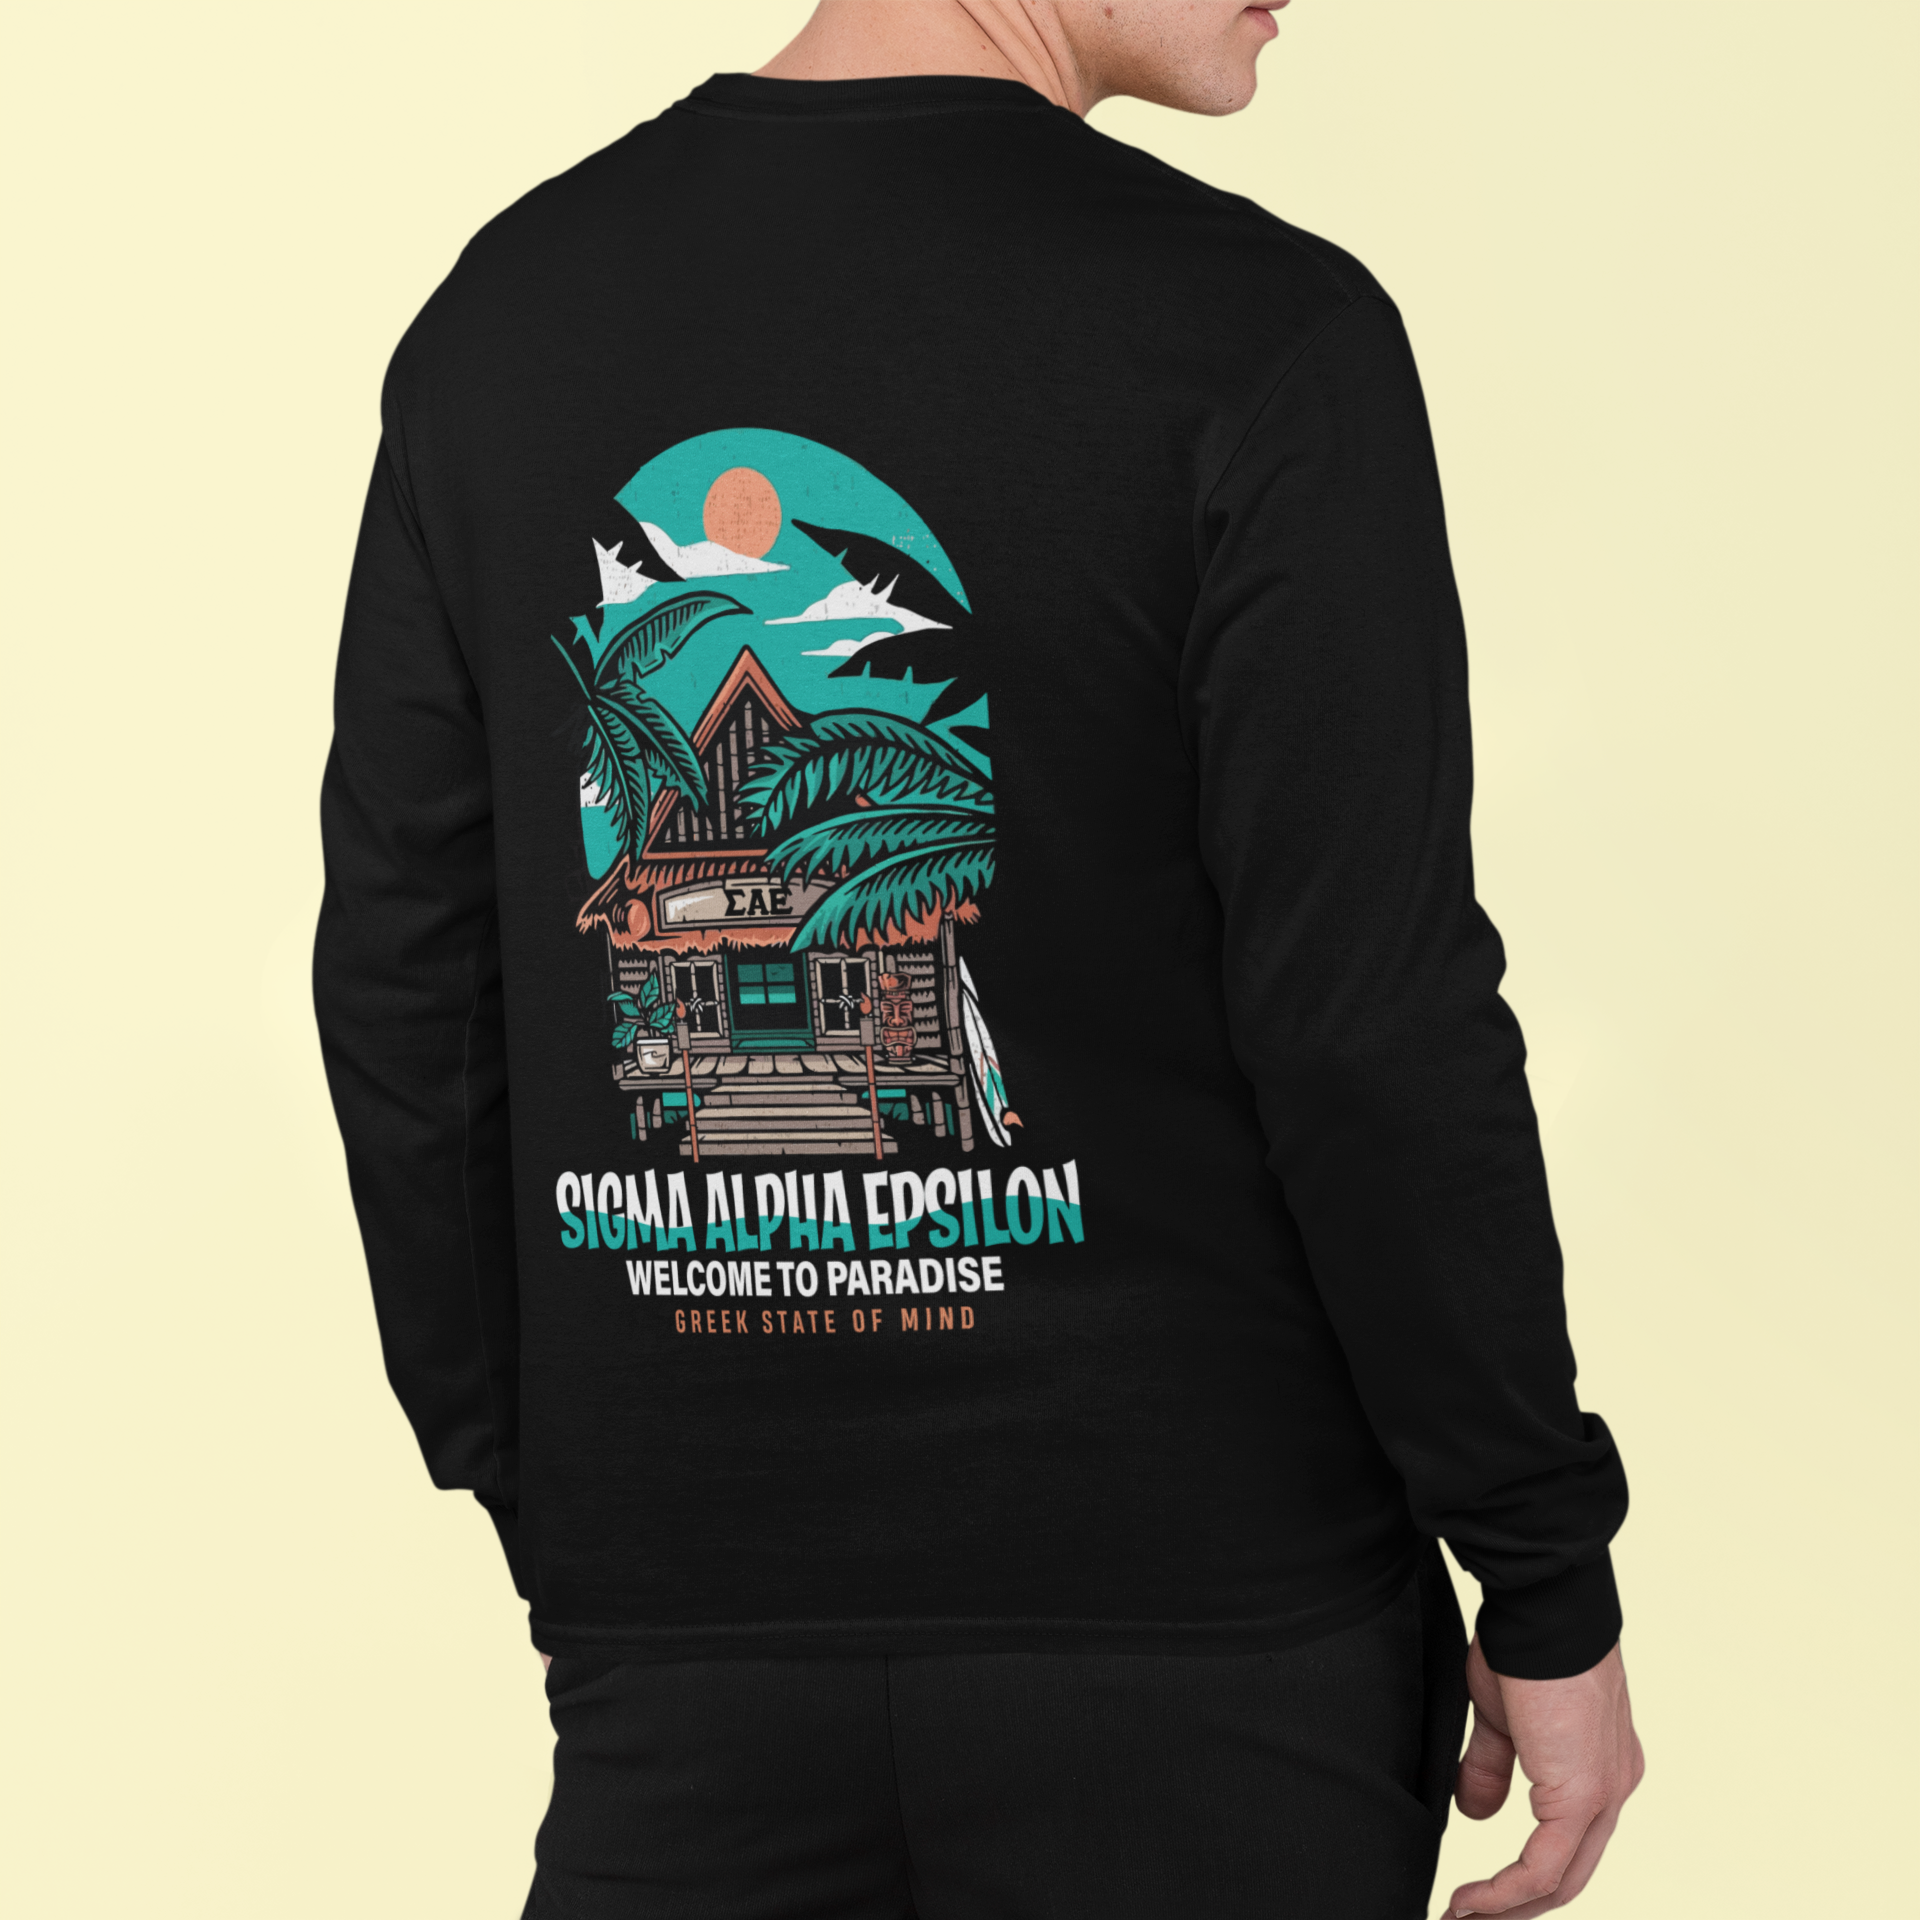 Sigma Alpha Epsilon Graphic Long Sleeve T-Shirt | Welcome to Paradise | Sigma Alpha Epsilon Clothing and Merchandise back model 